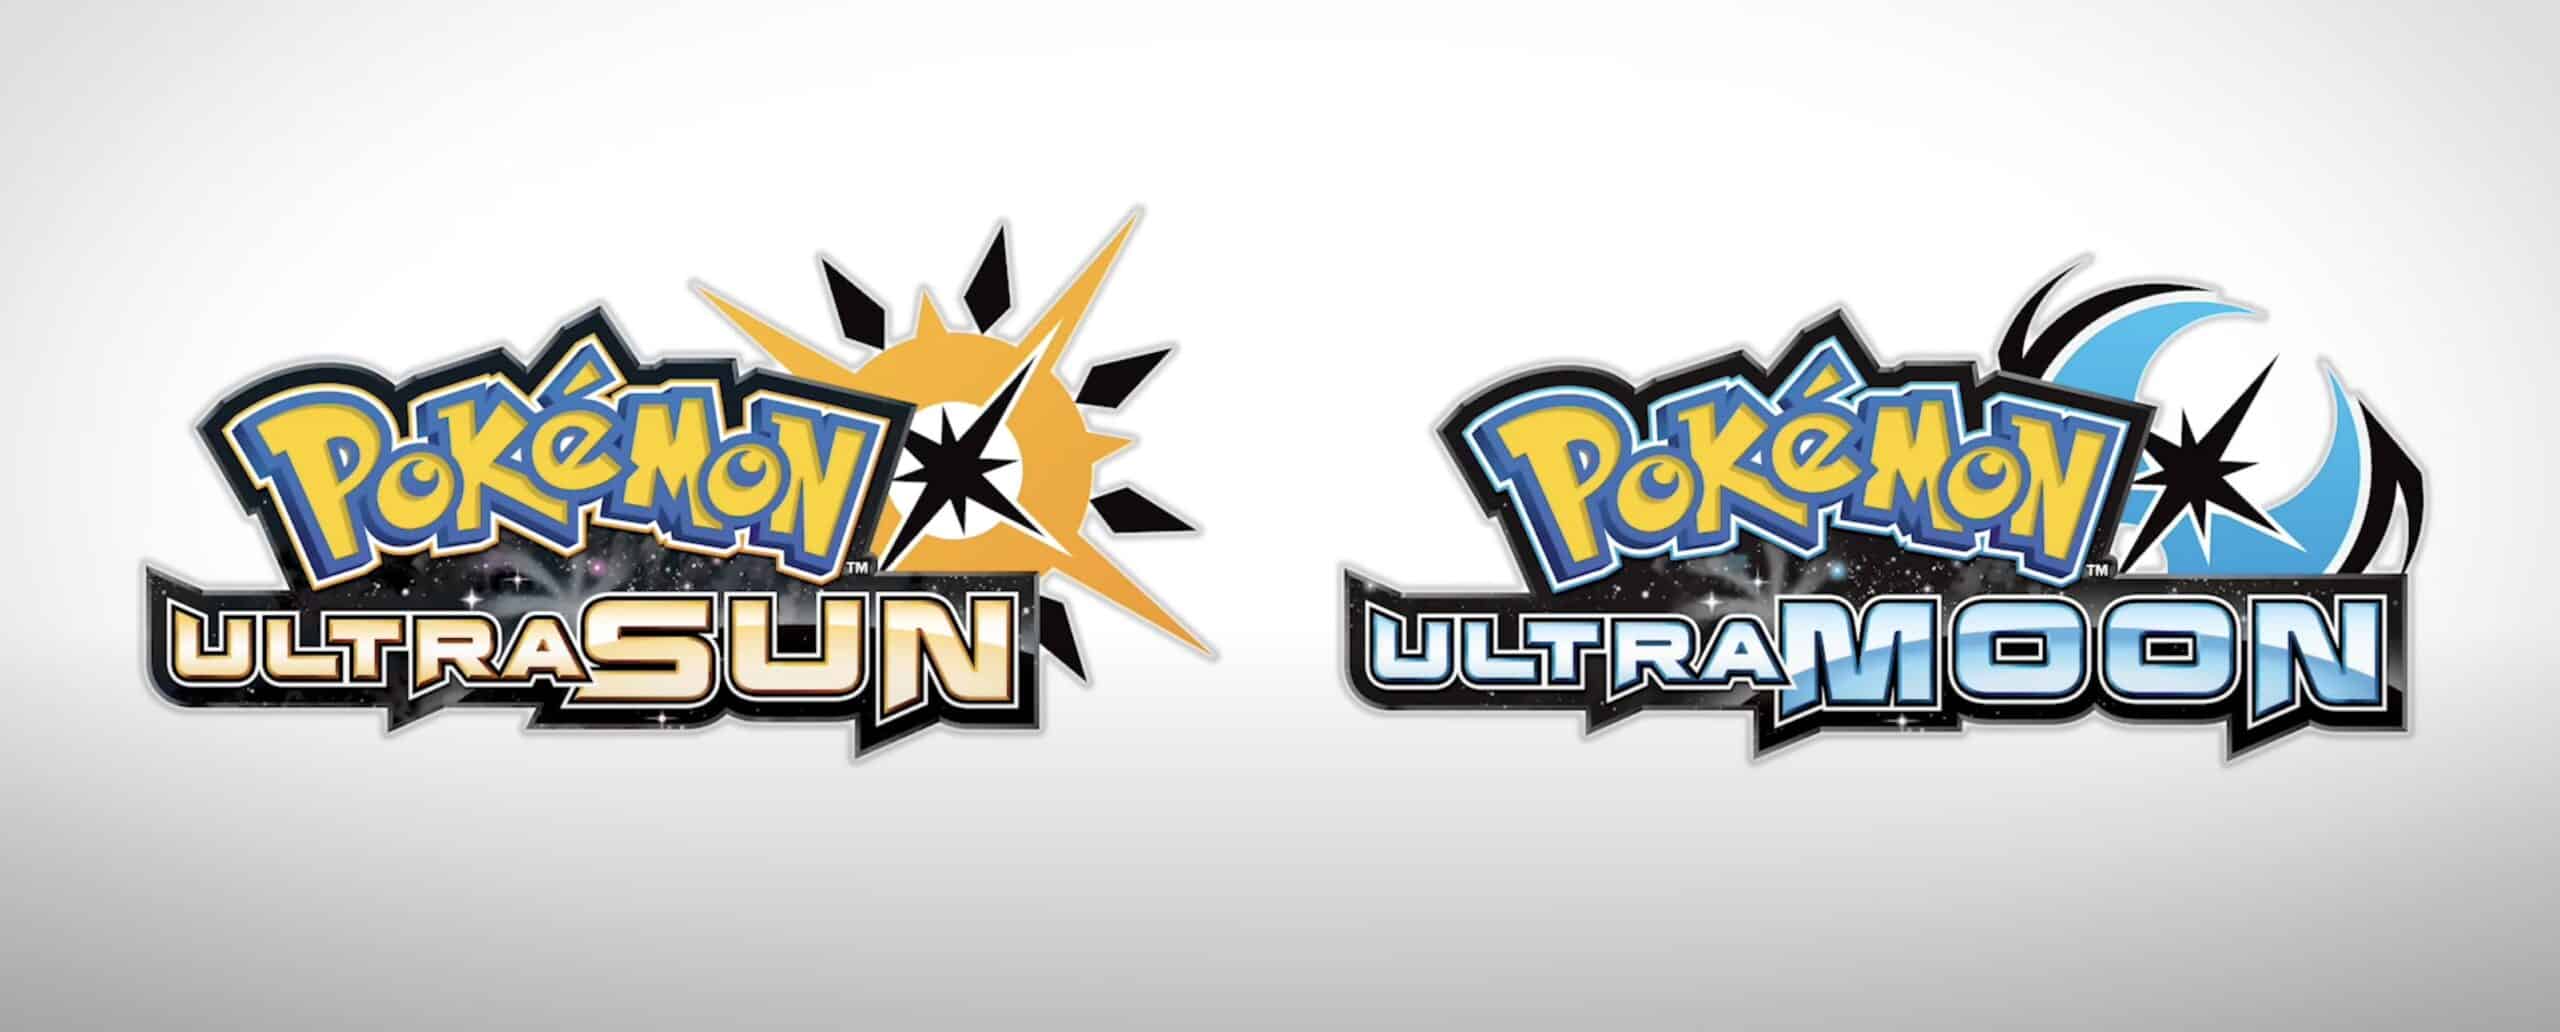 The Pokemon Ultra Sun and Ultra Moon logos